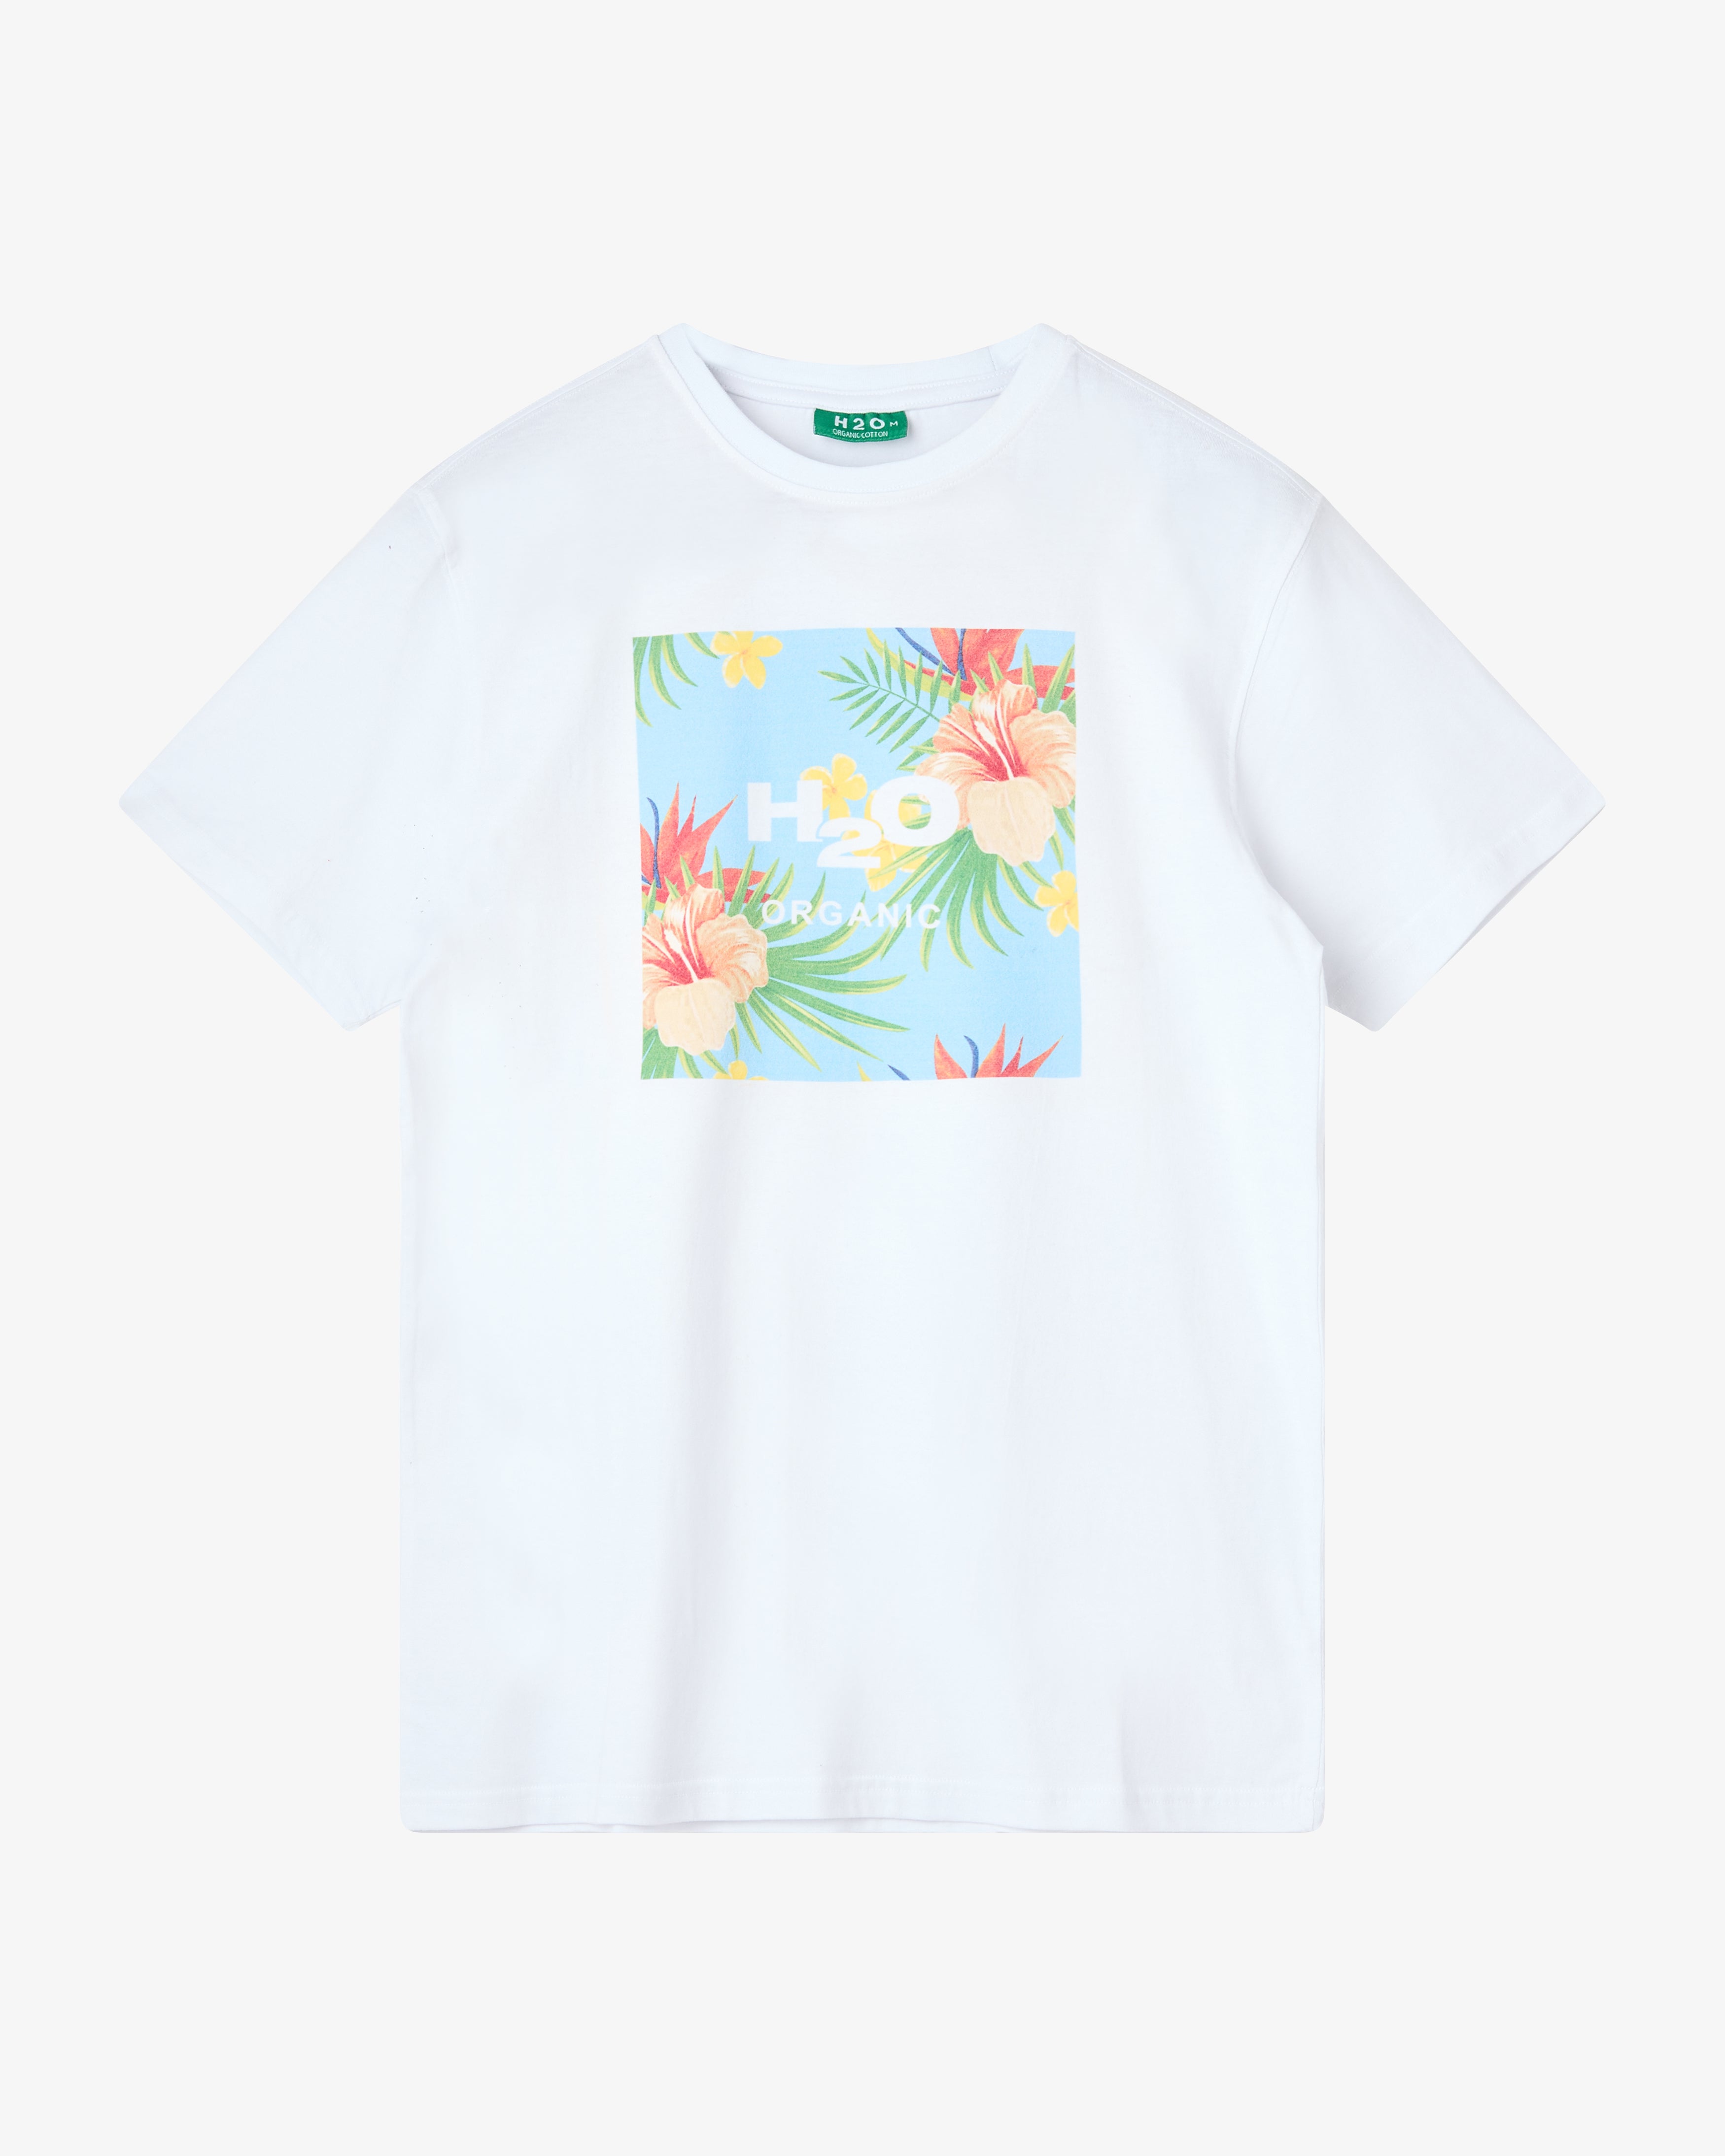 Key West T-Shirt